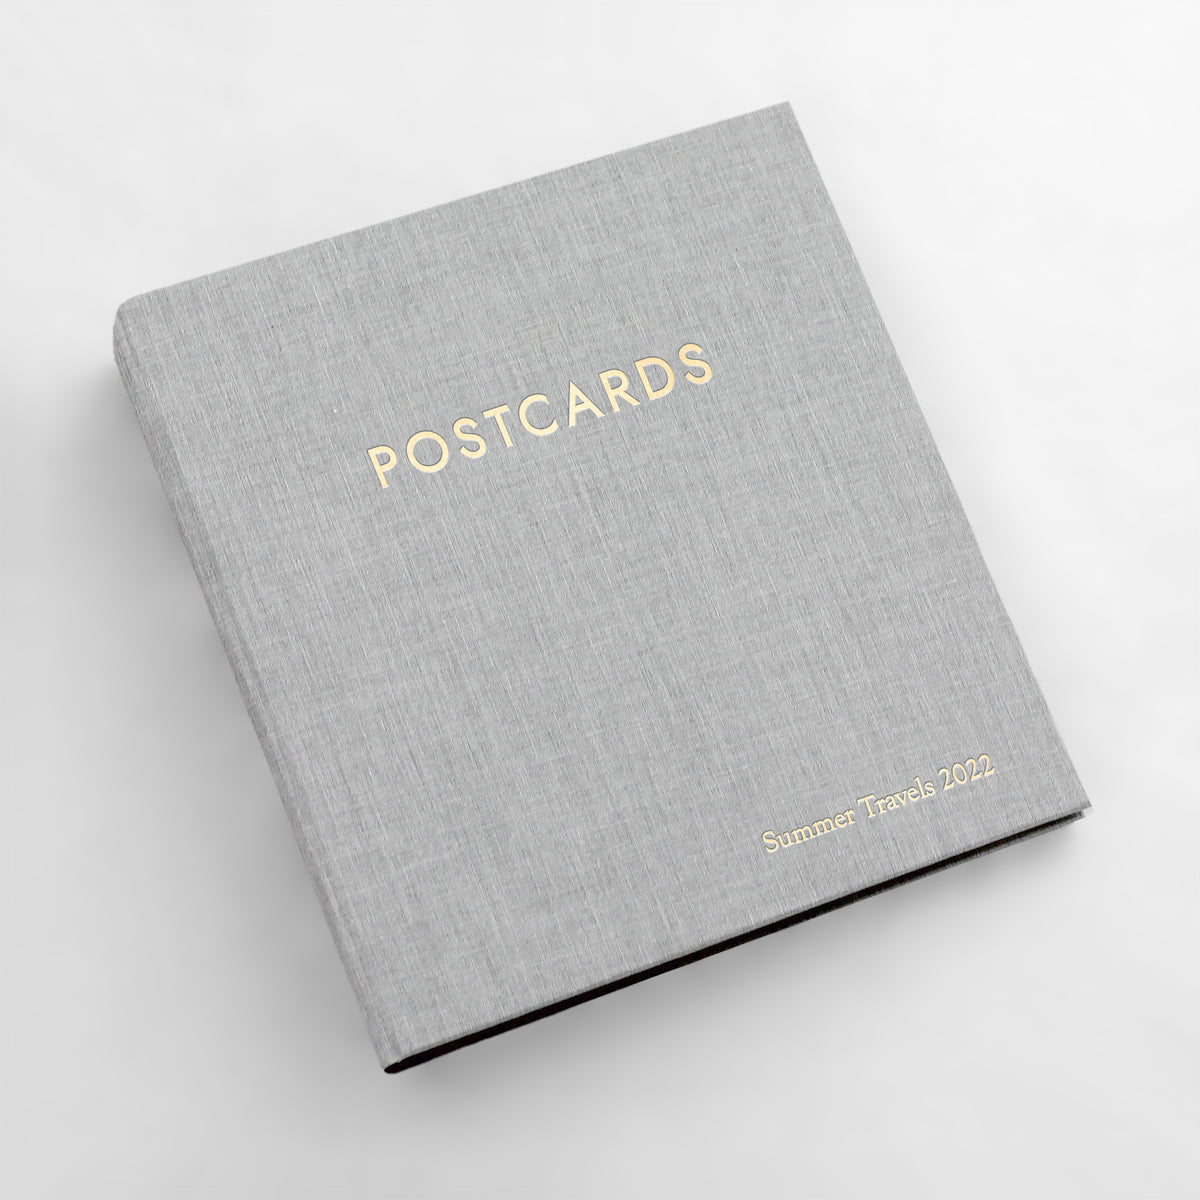 Medium Postcard Album | Cover: Dove Gray Linen | Available Personalized